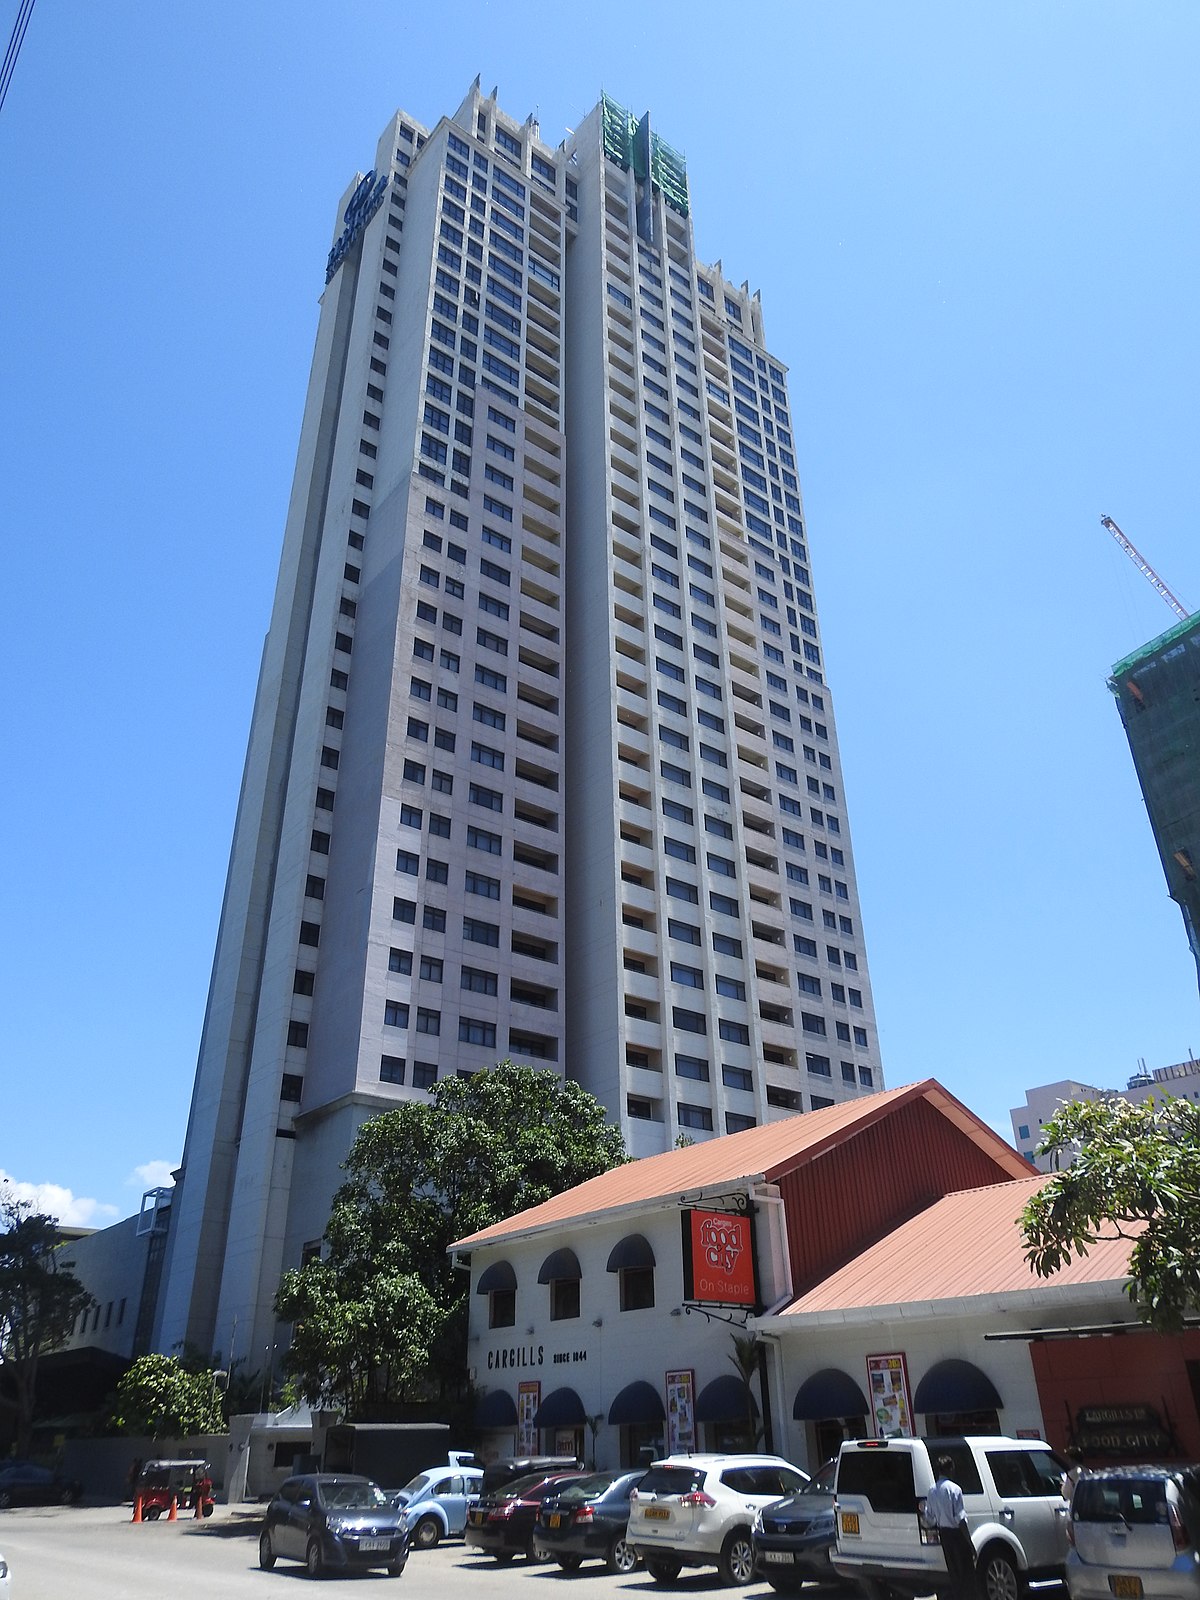 Colombo Hotels - Hilton Colombo Hotel - Hotels in Colombo